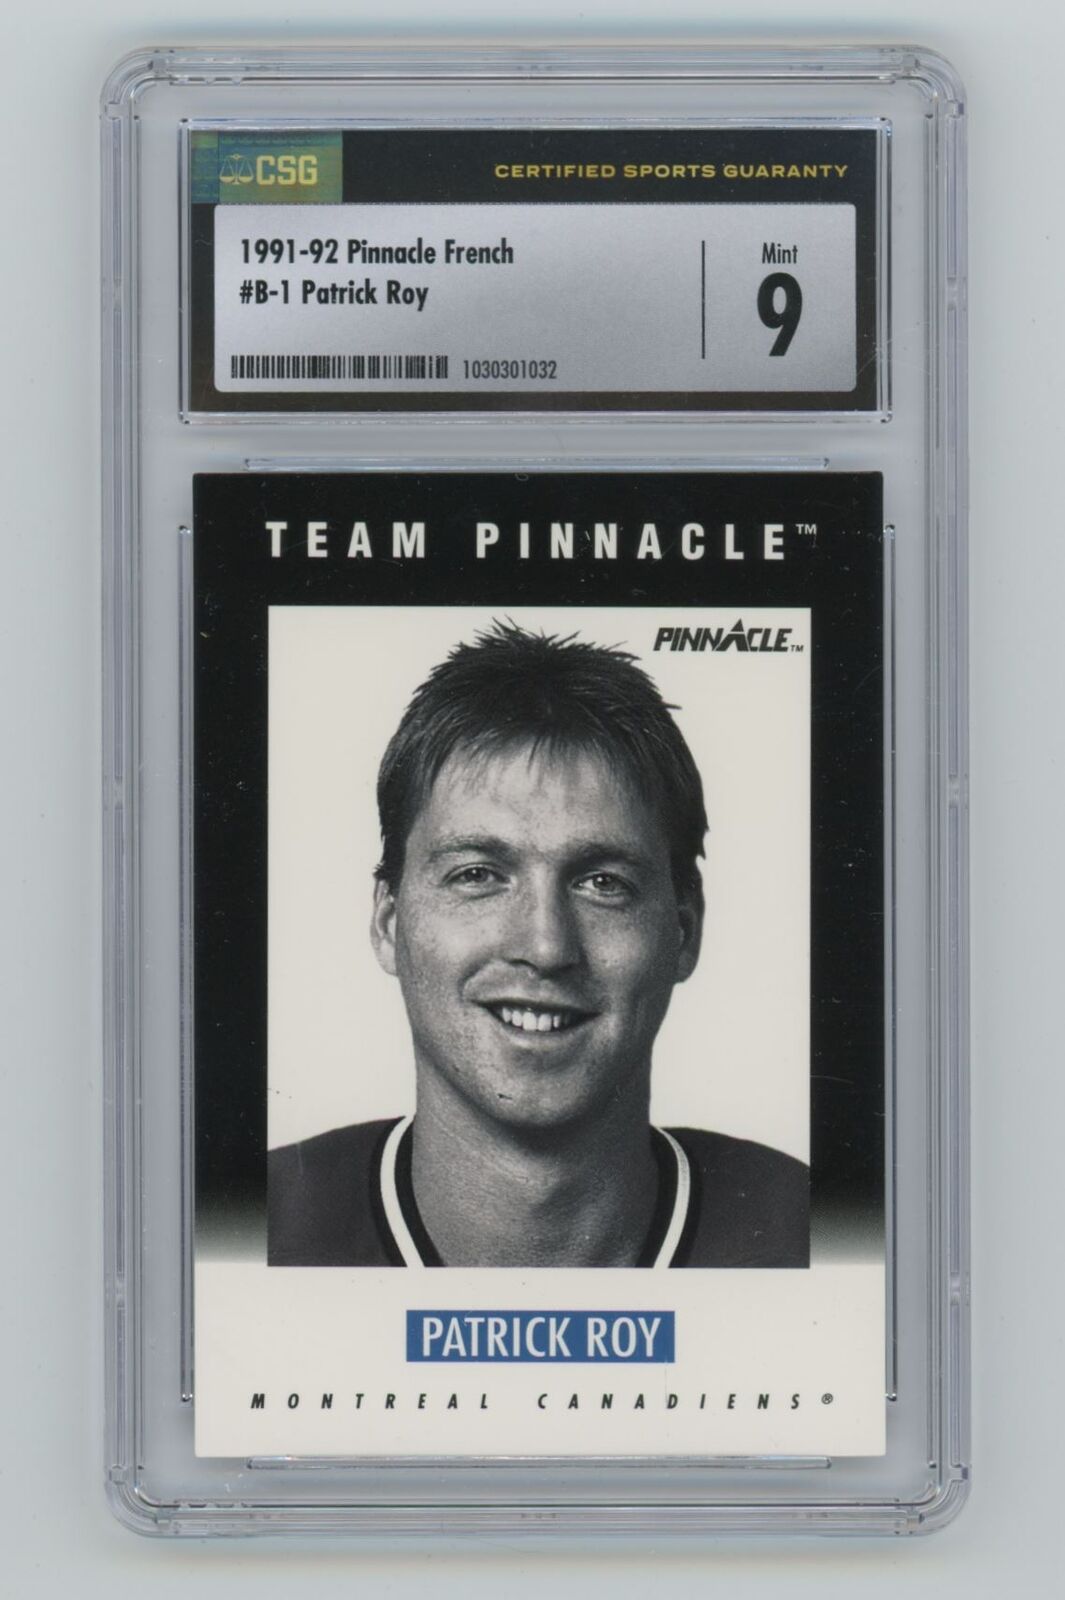 1991-92 Pinnacle French CSG MINT 9 Patrick Roy . Montreal Canadiens #B-1